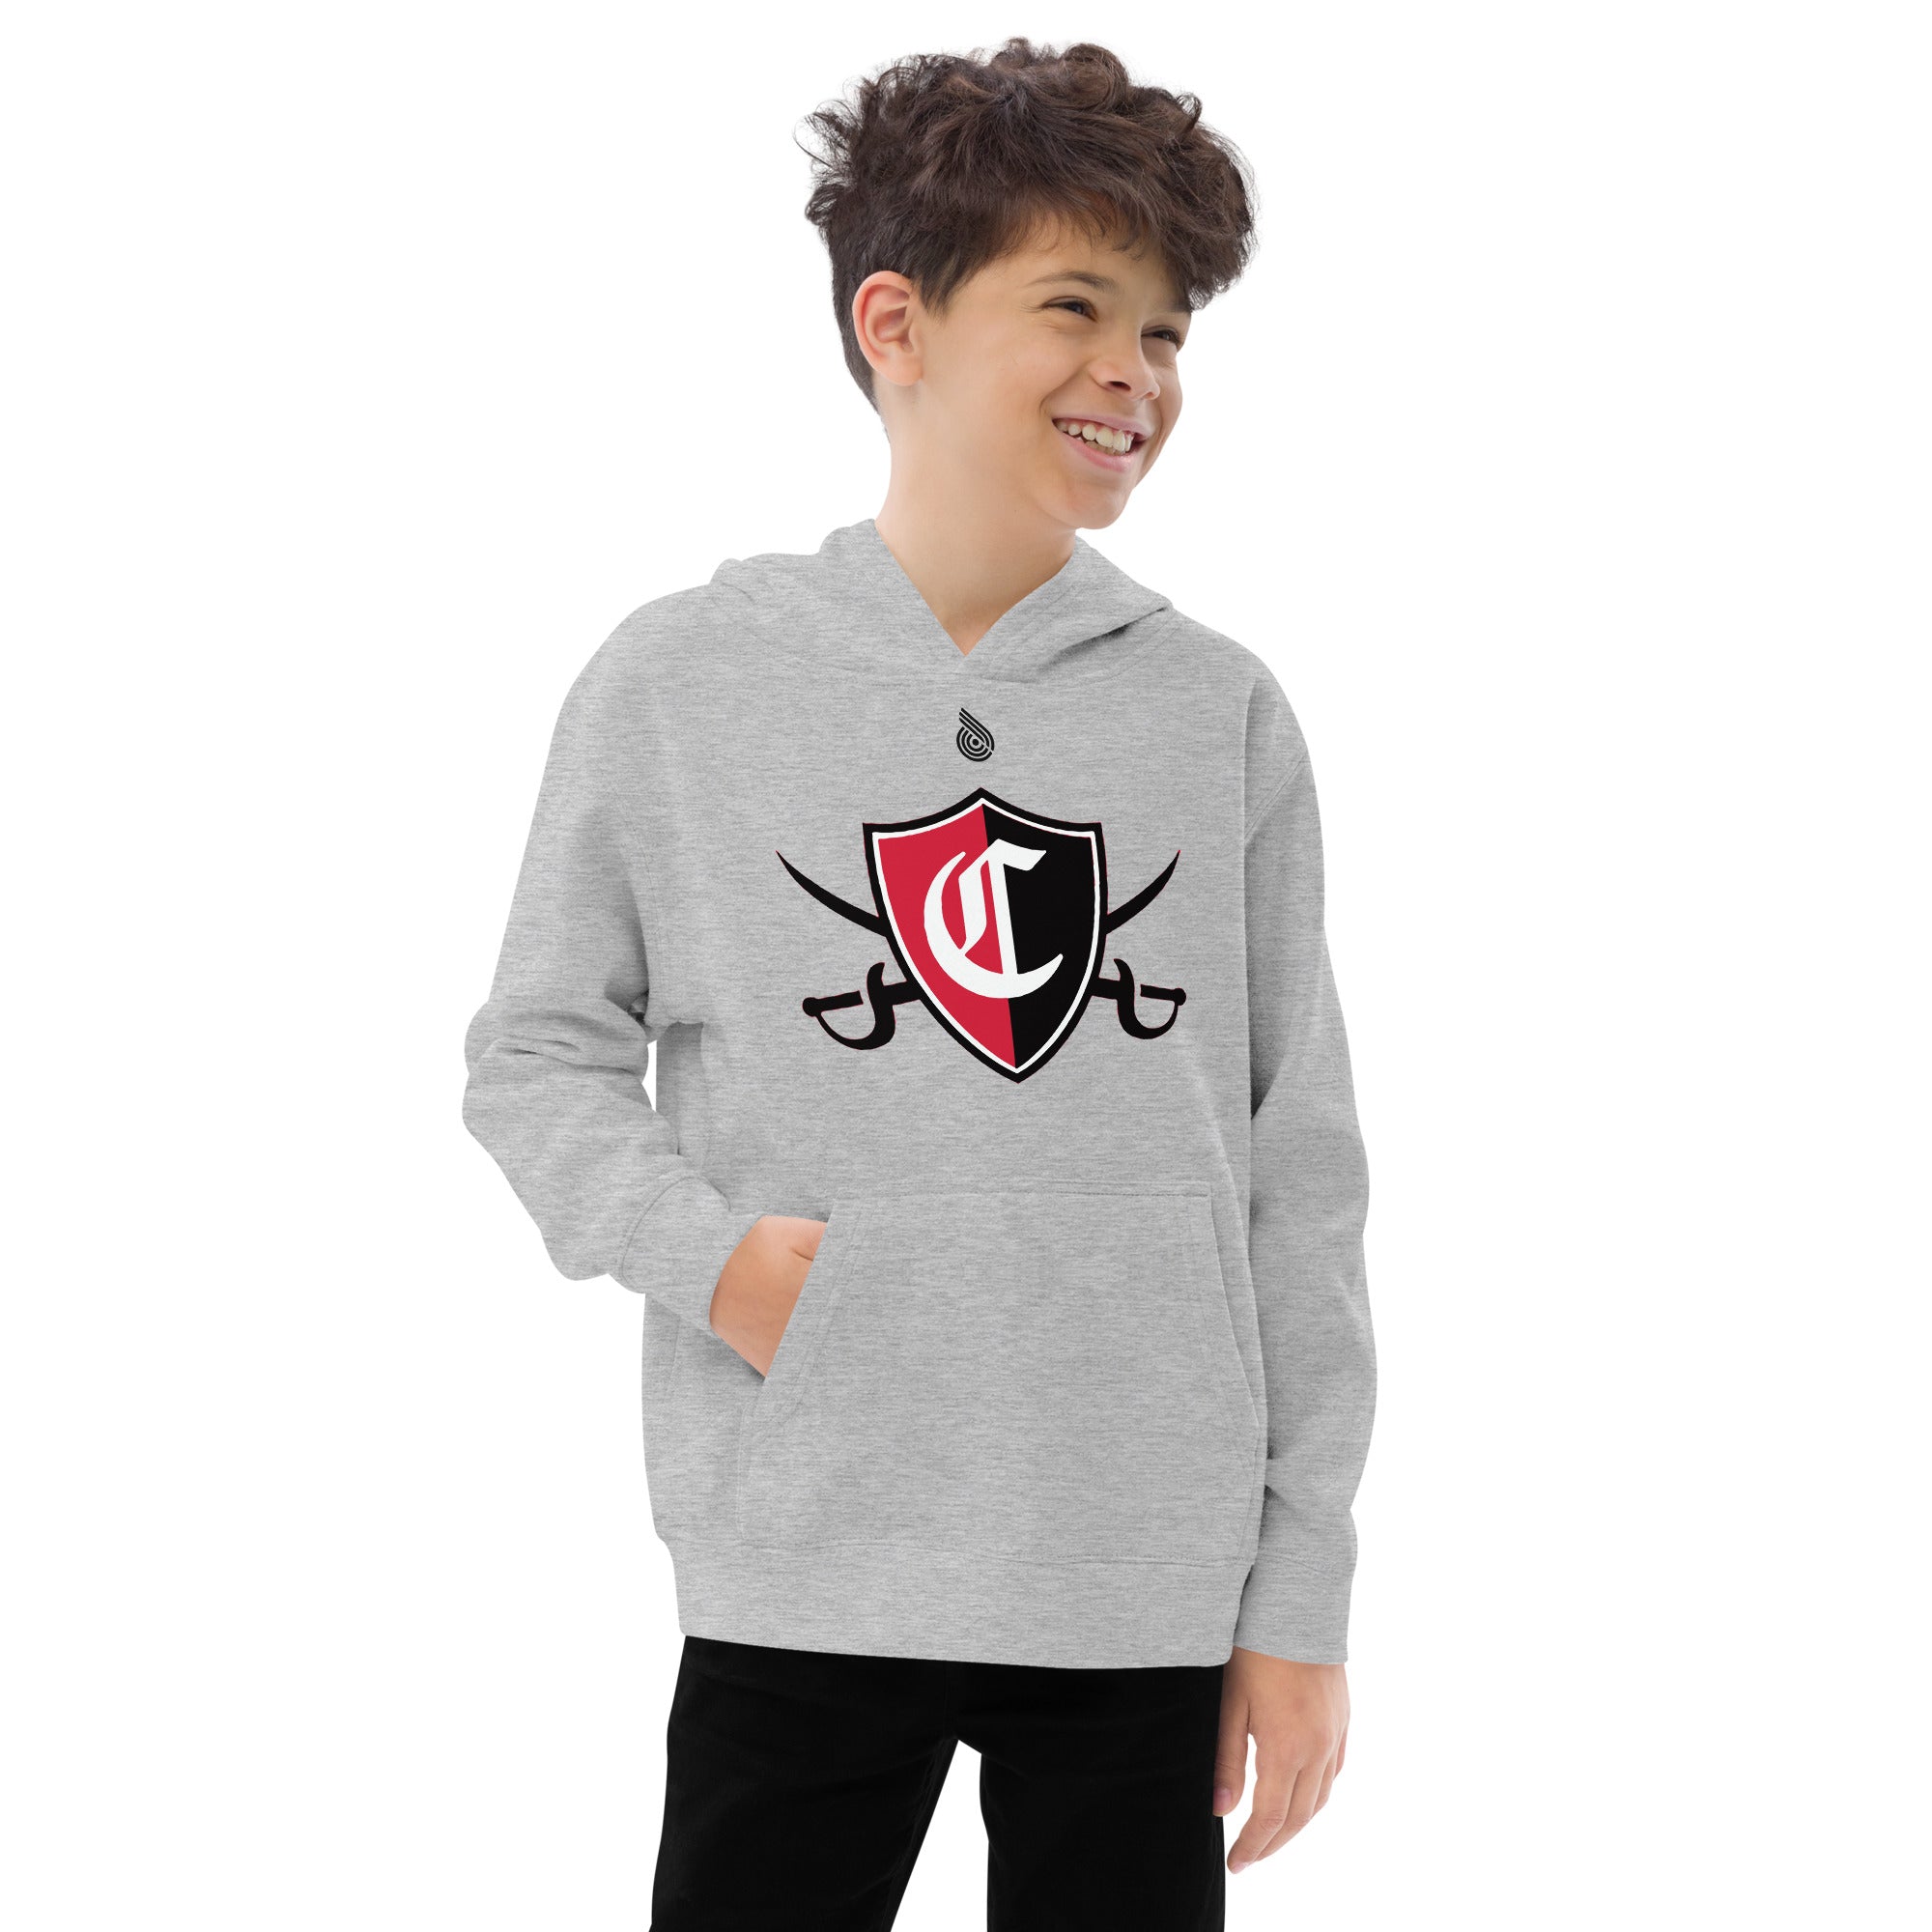 Clackamas Youth fleece hoodie